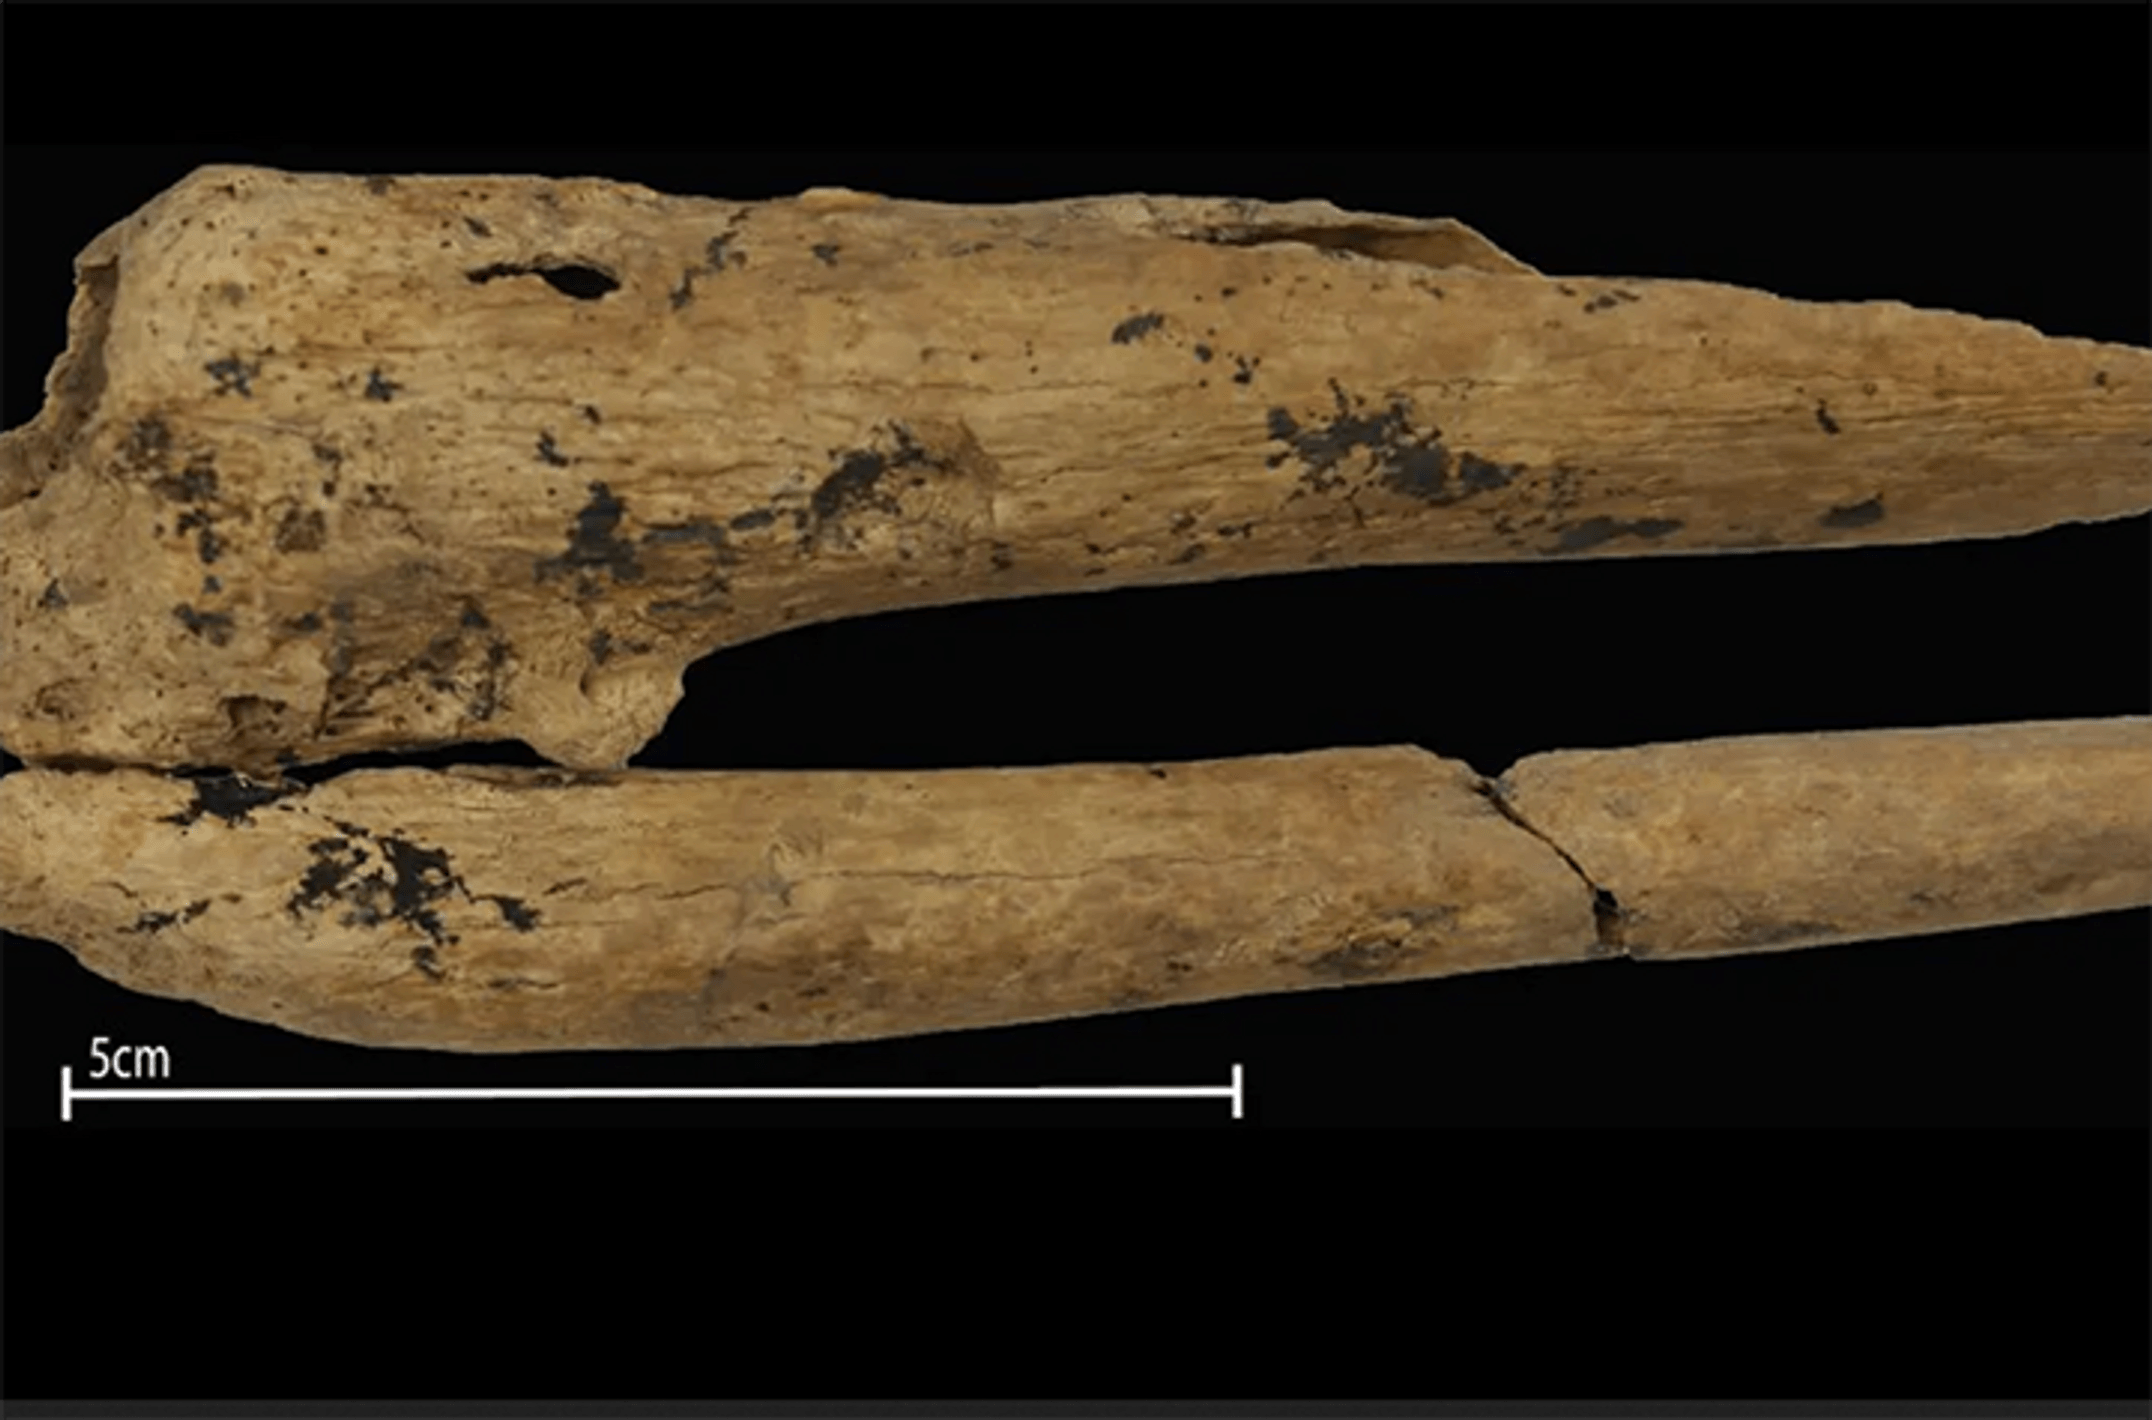 Close-up of fossil bone